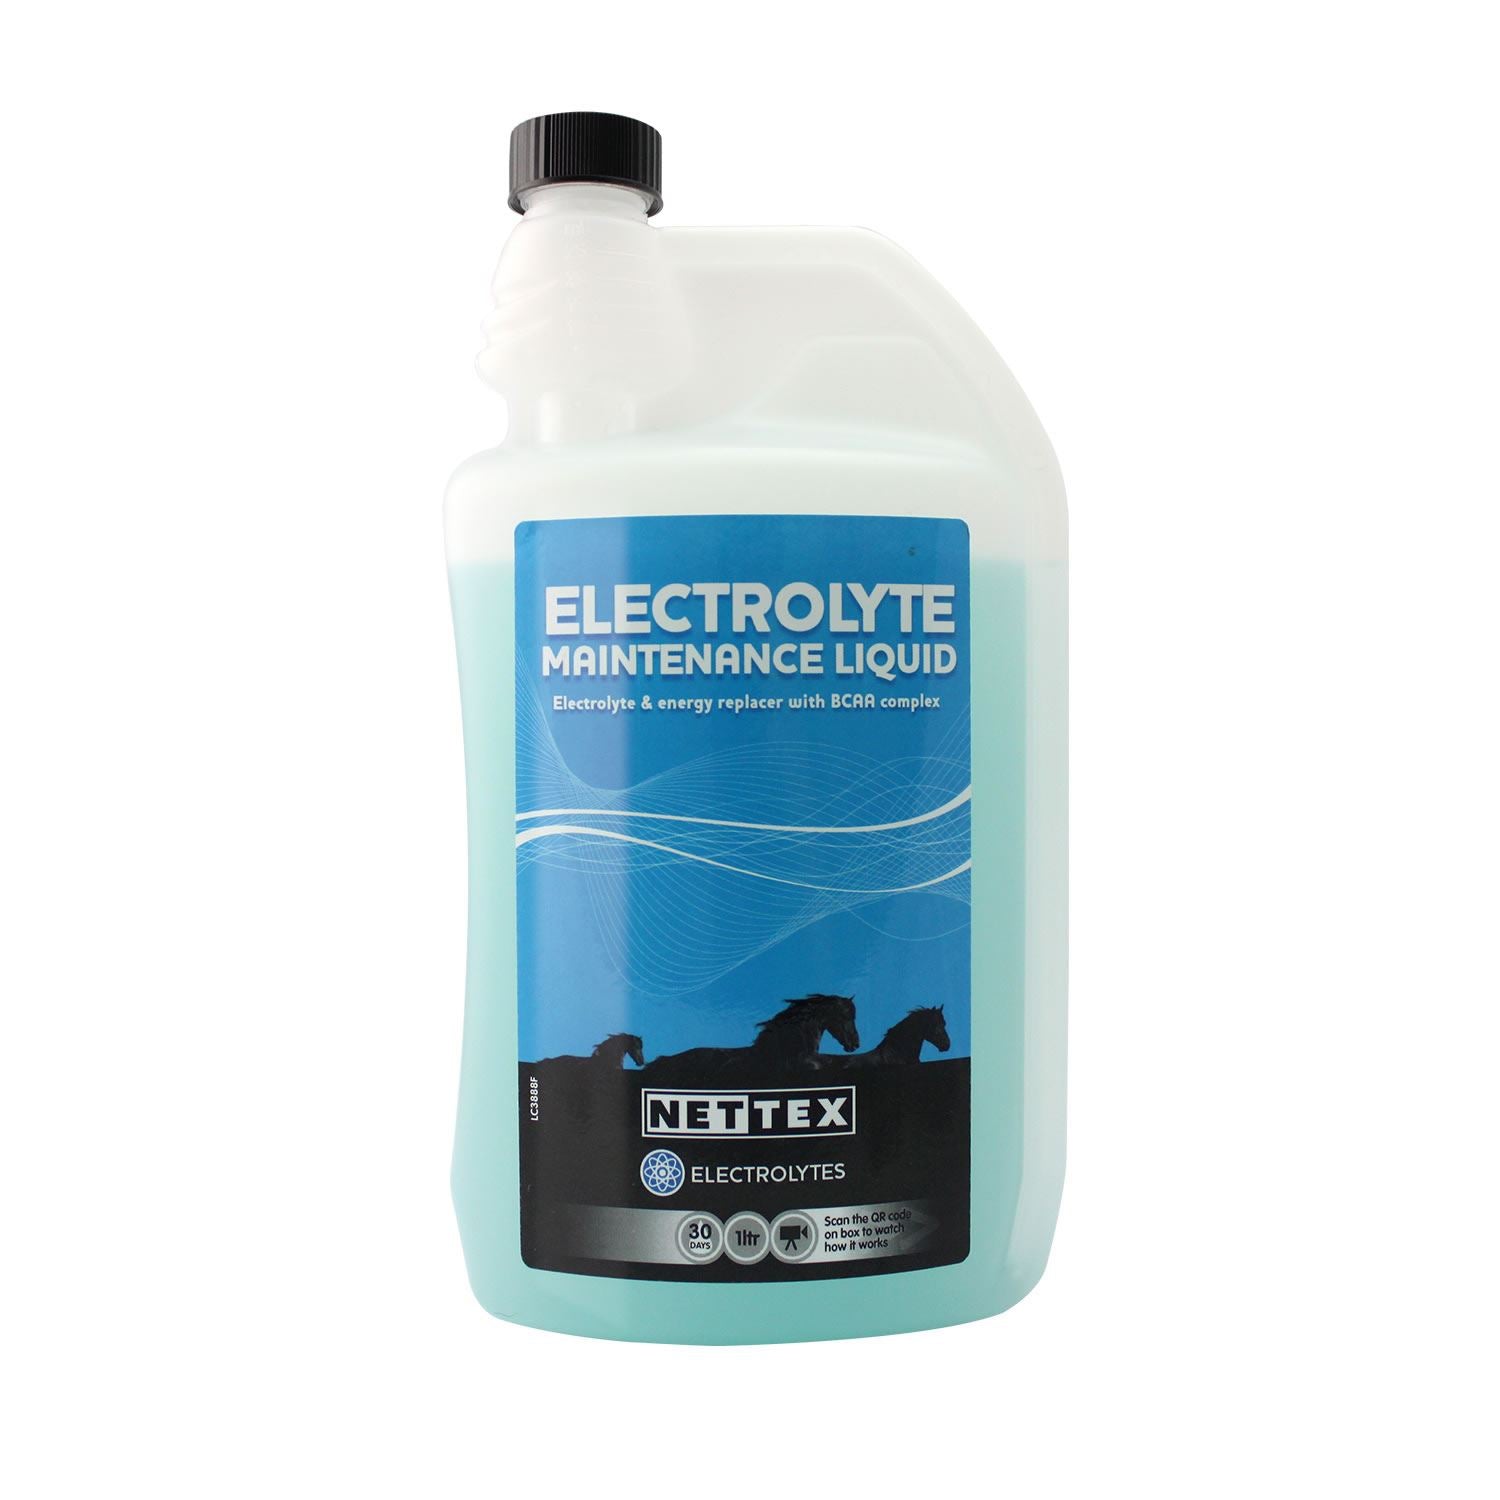 Nettex Electrolyte Maintenanceliquid - Just Horse Riders